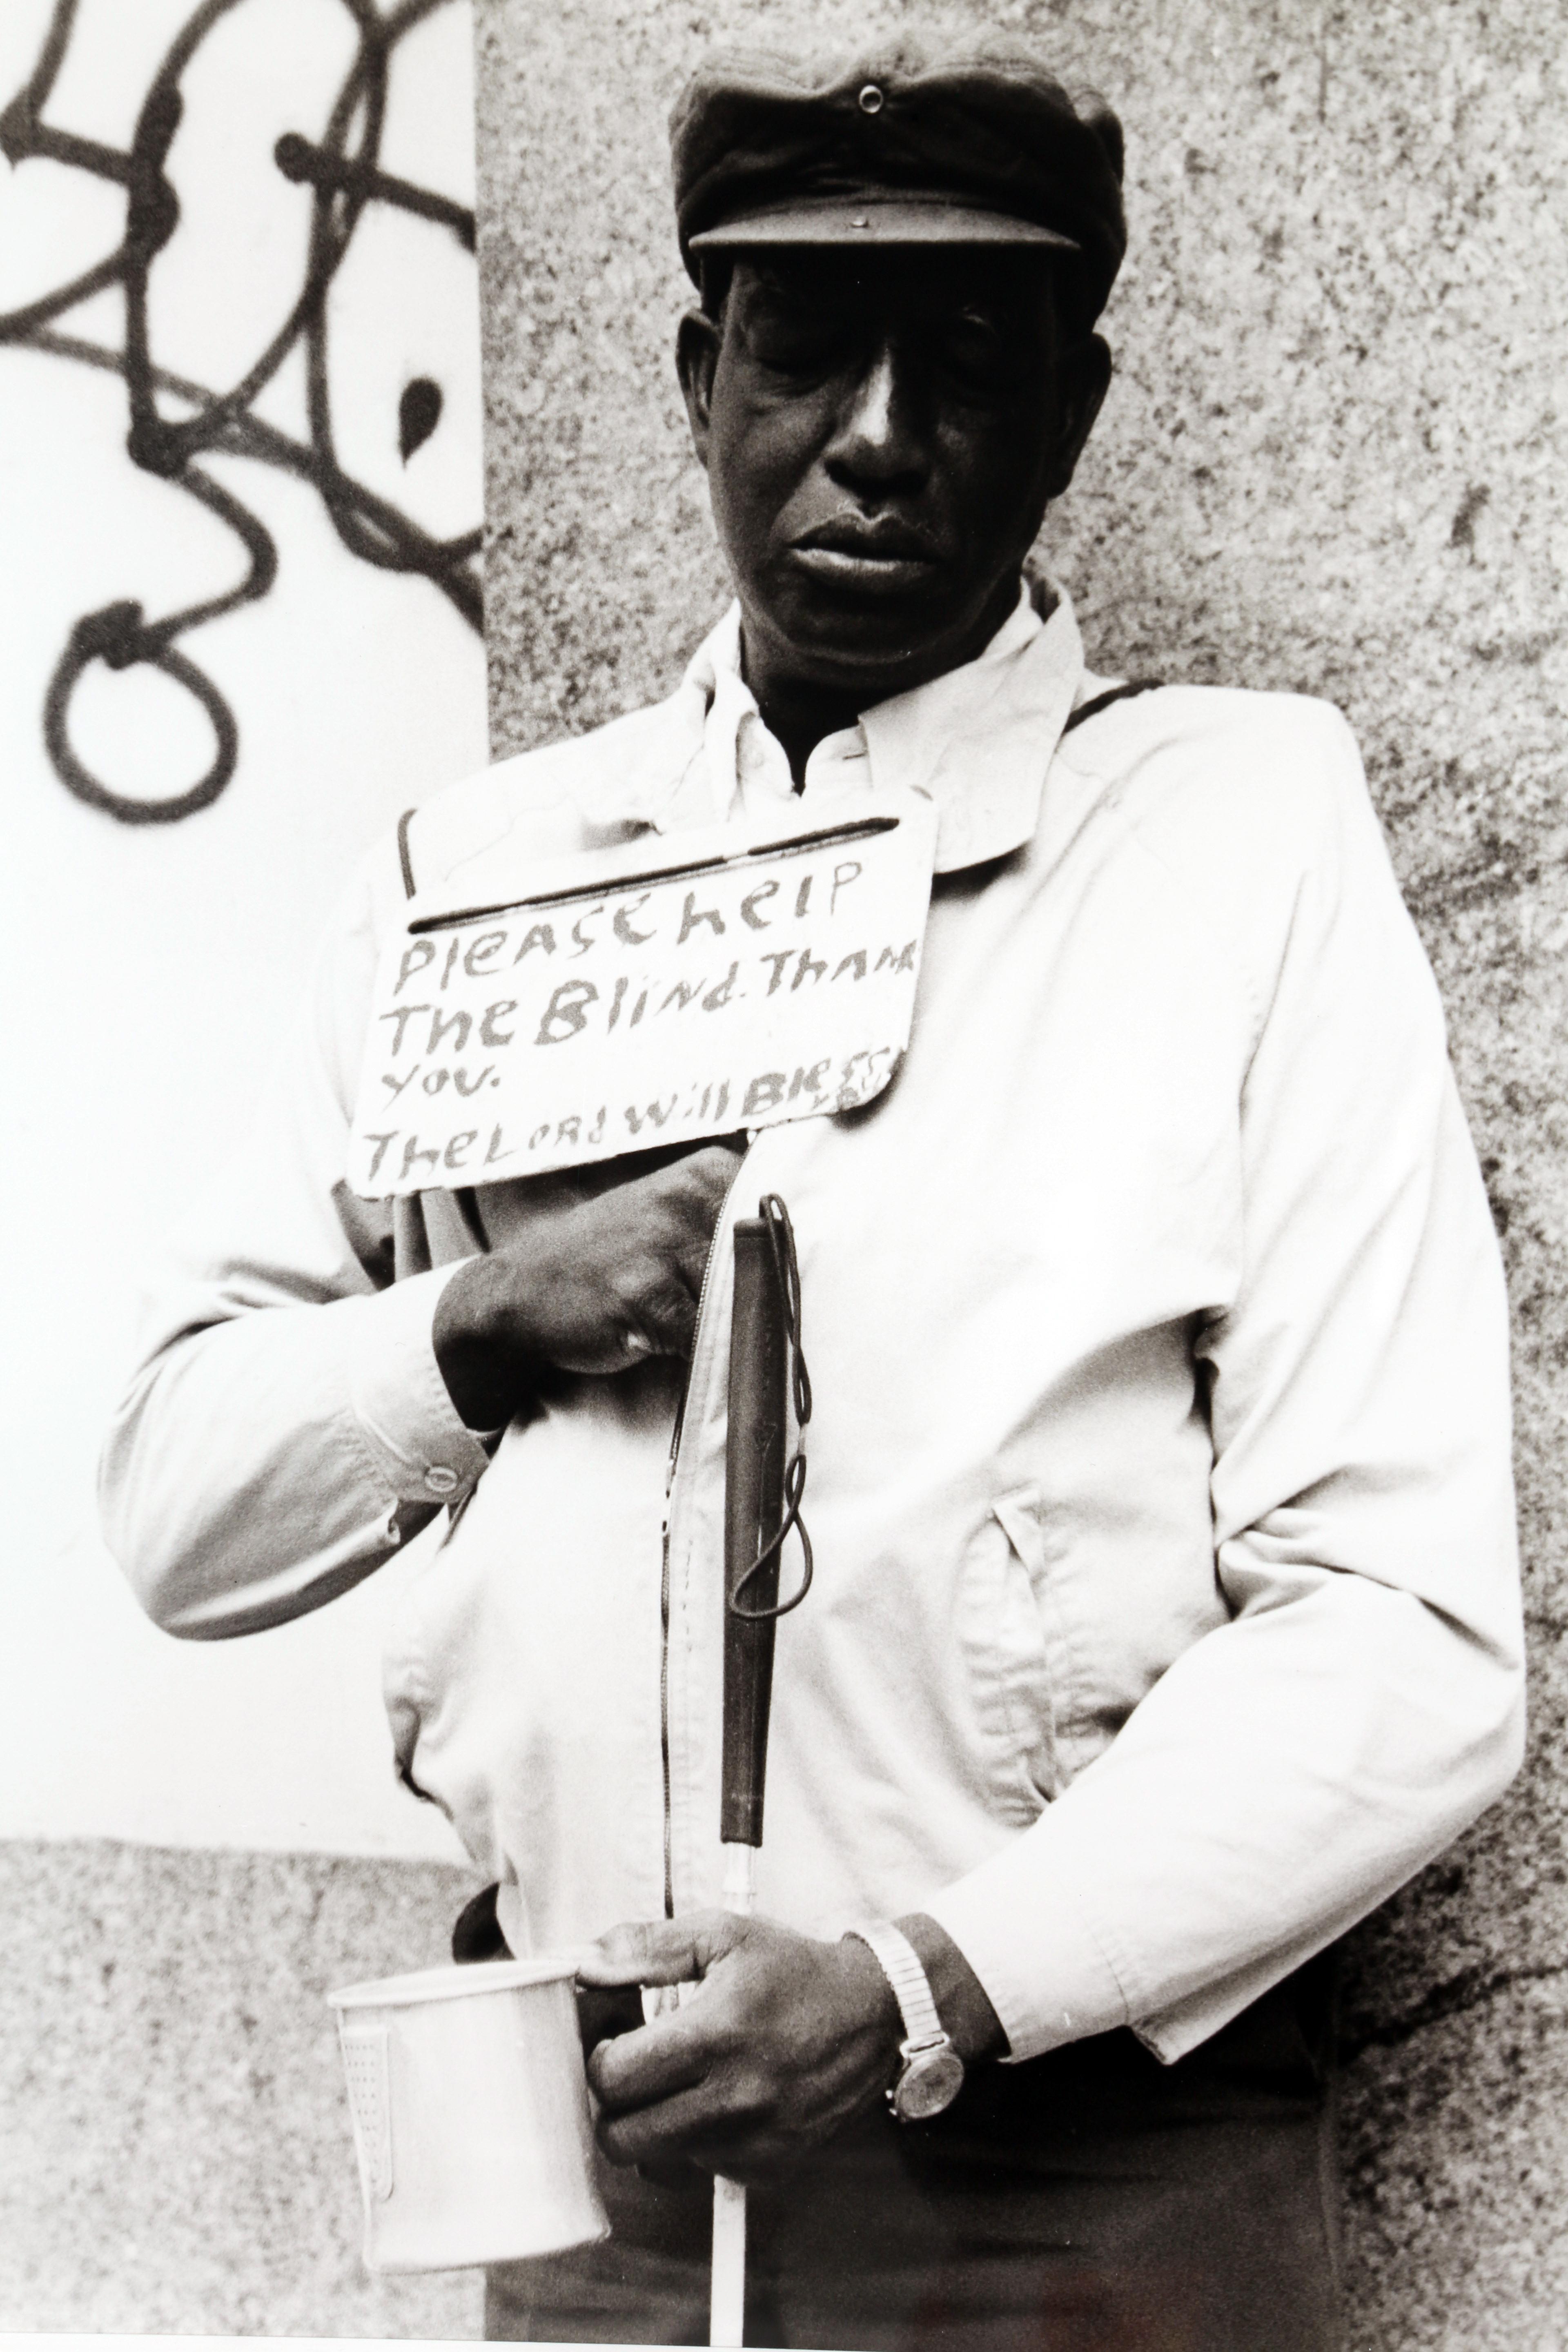 Blind Beggar - Broadway & 34th St., New York City  - Photograph by S. Vincent Dillard